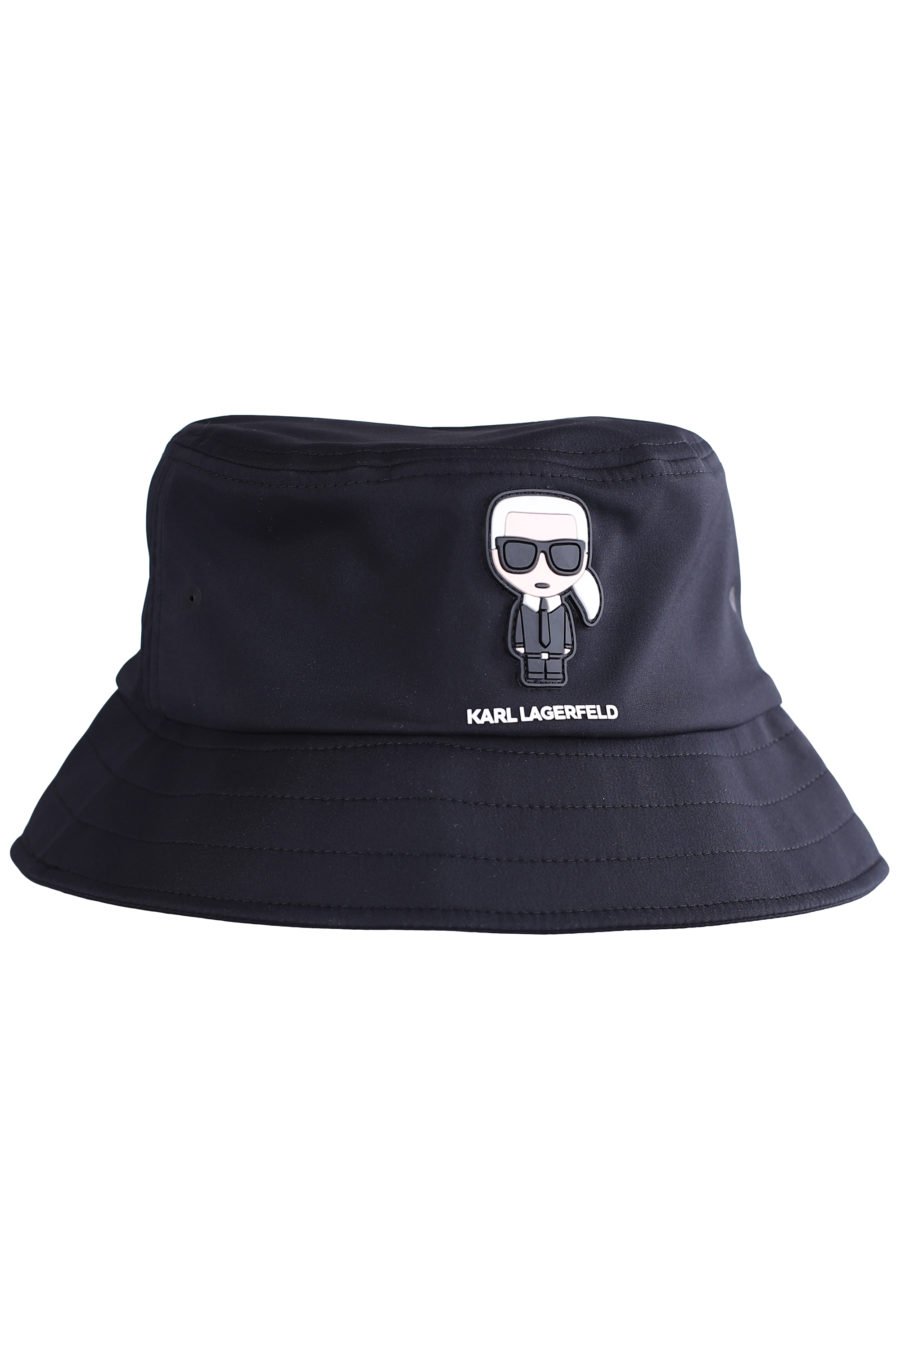 Sombrero de pescador negro con logotipo engomado "Karl" - IMG 0637